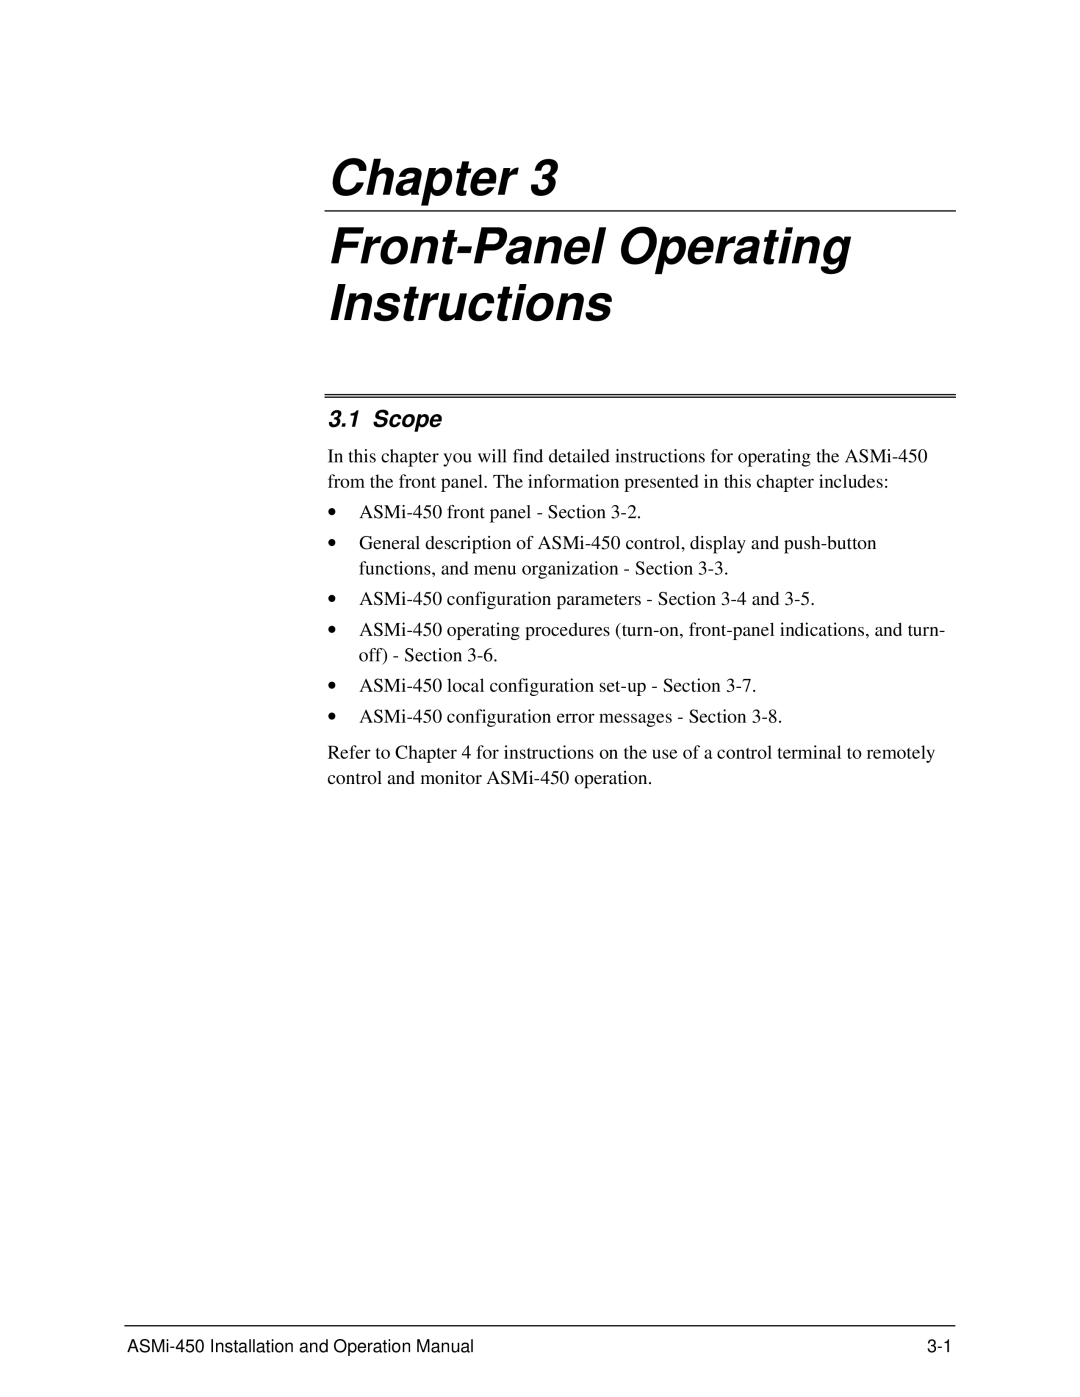 RAD Data comm ASMI-450 operation manual Chapter Front-Panel Operating Instructions, Scope 